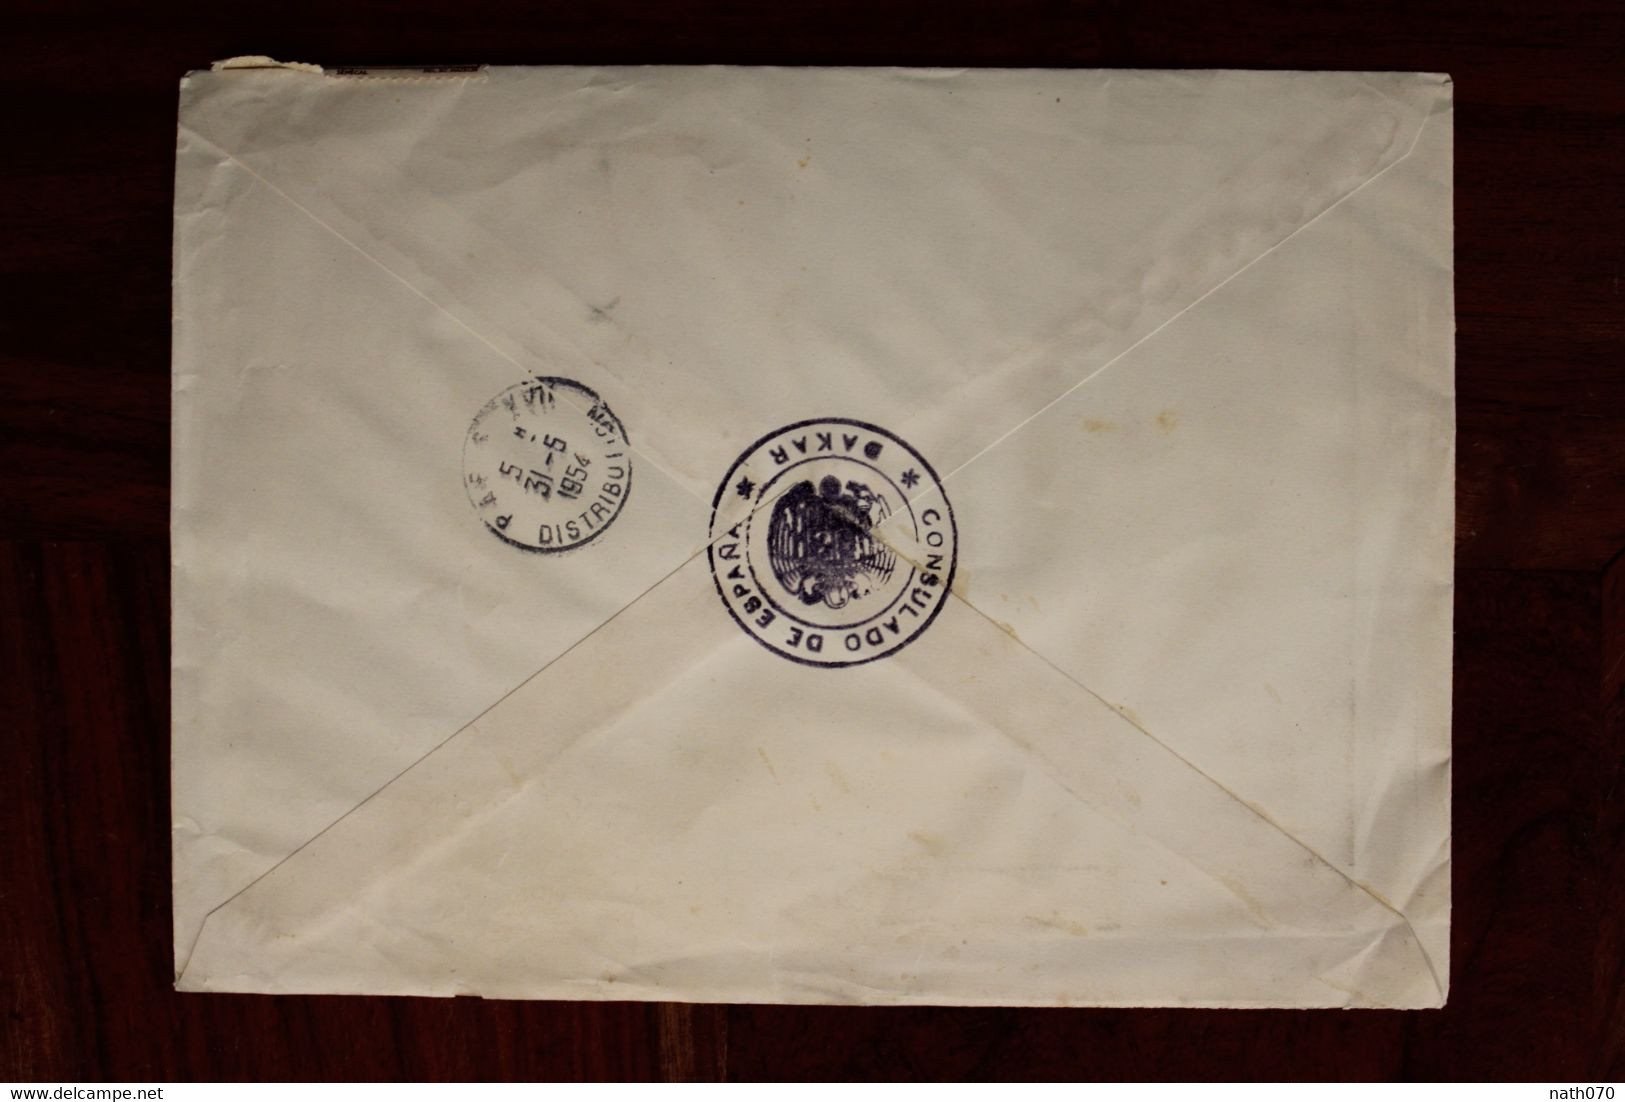 1954 SENEGAL France Enveloppe Consulado Espana Spain Espagne Cover Air Mail Colonies AOF Recommandé Registered R - Brieven En Documenten